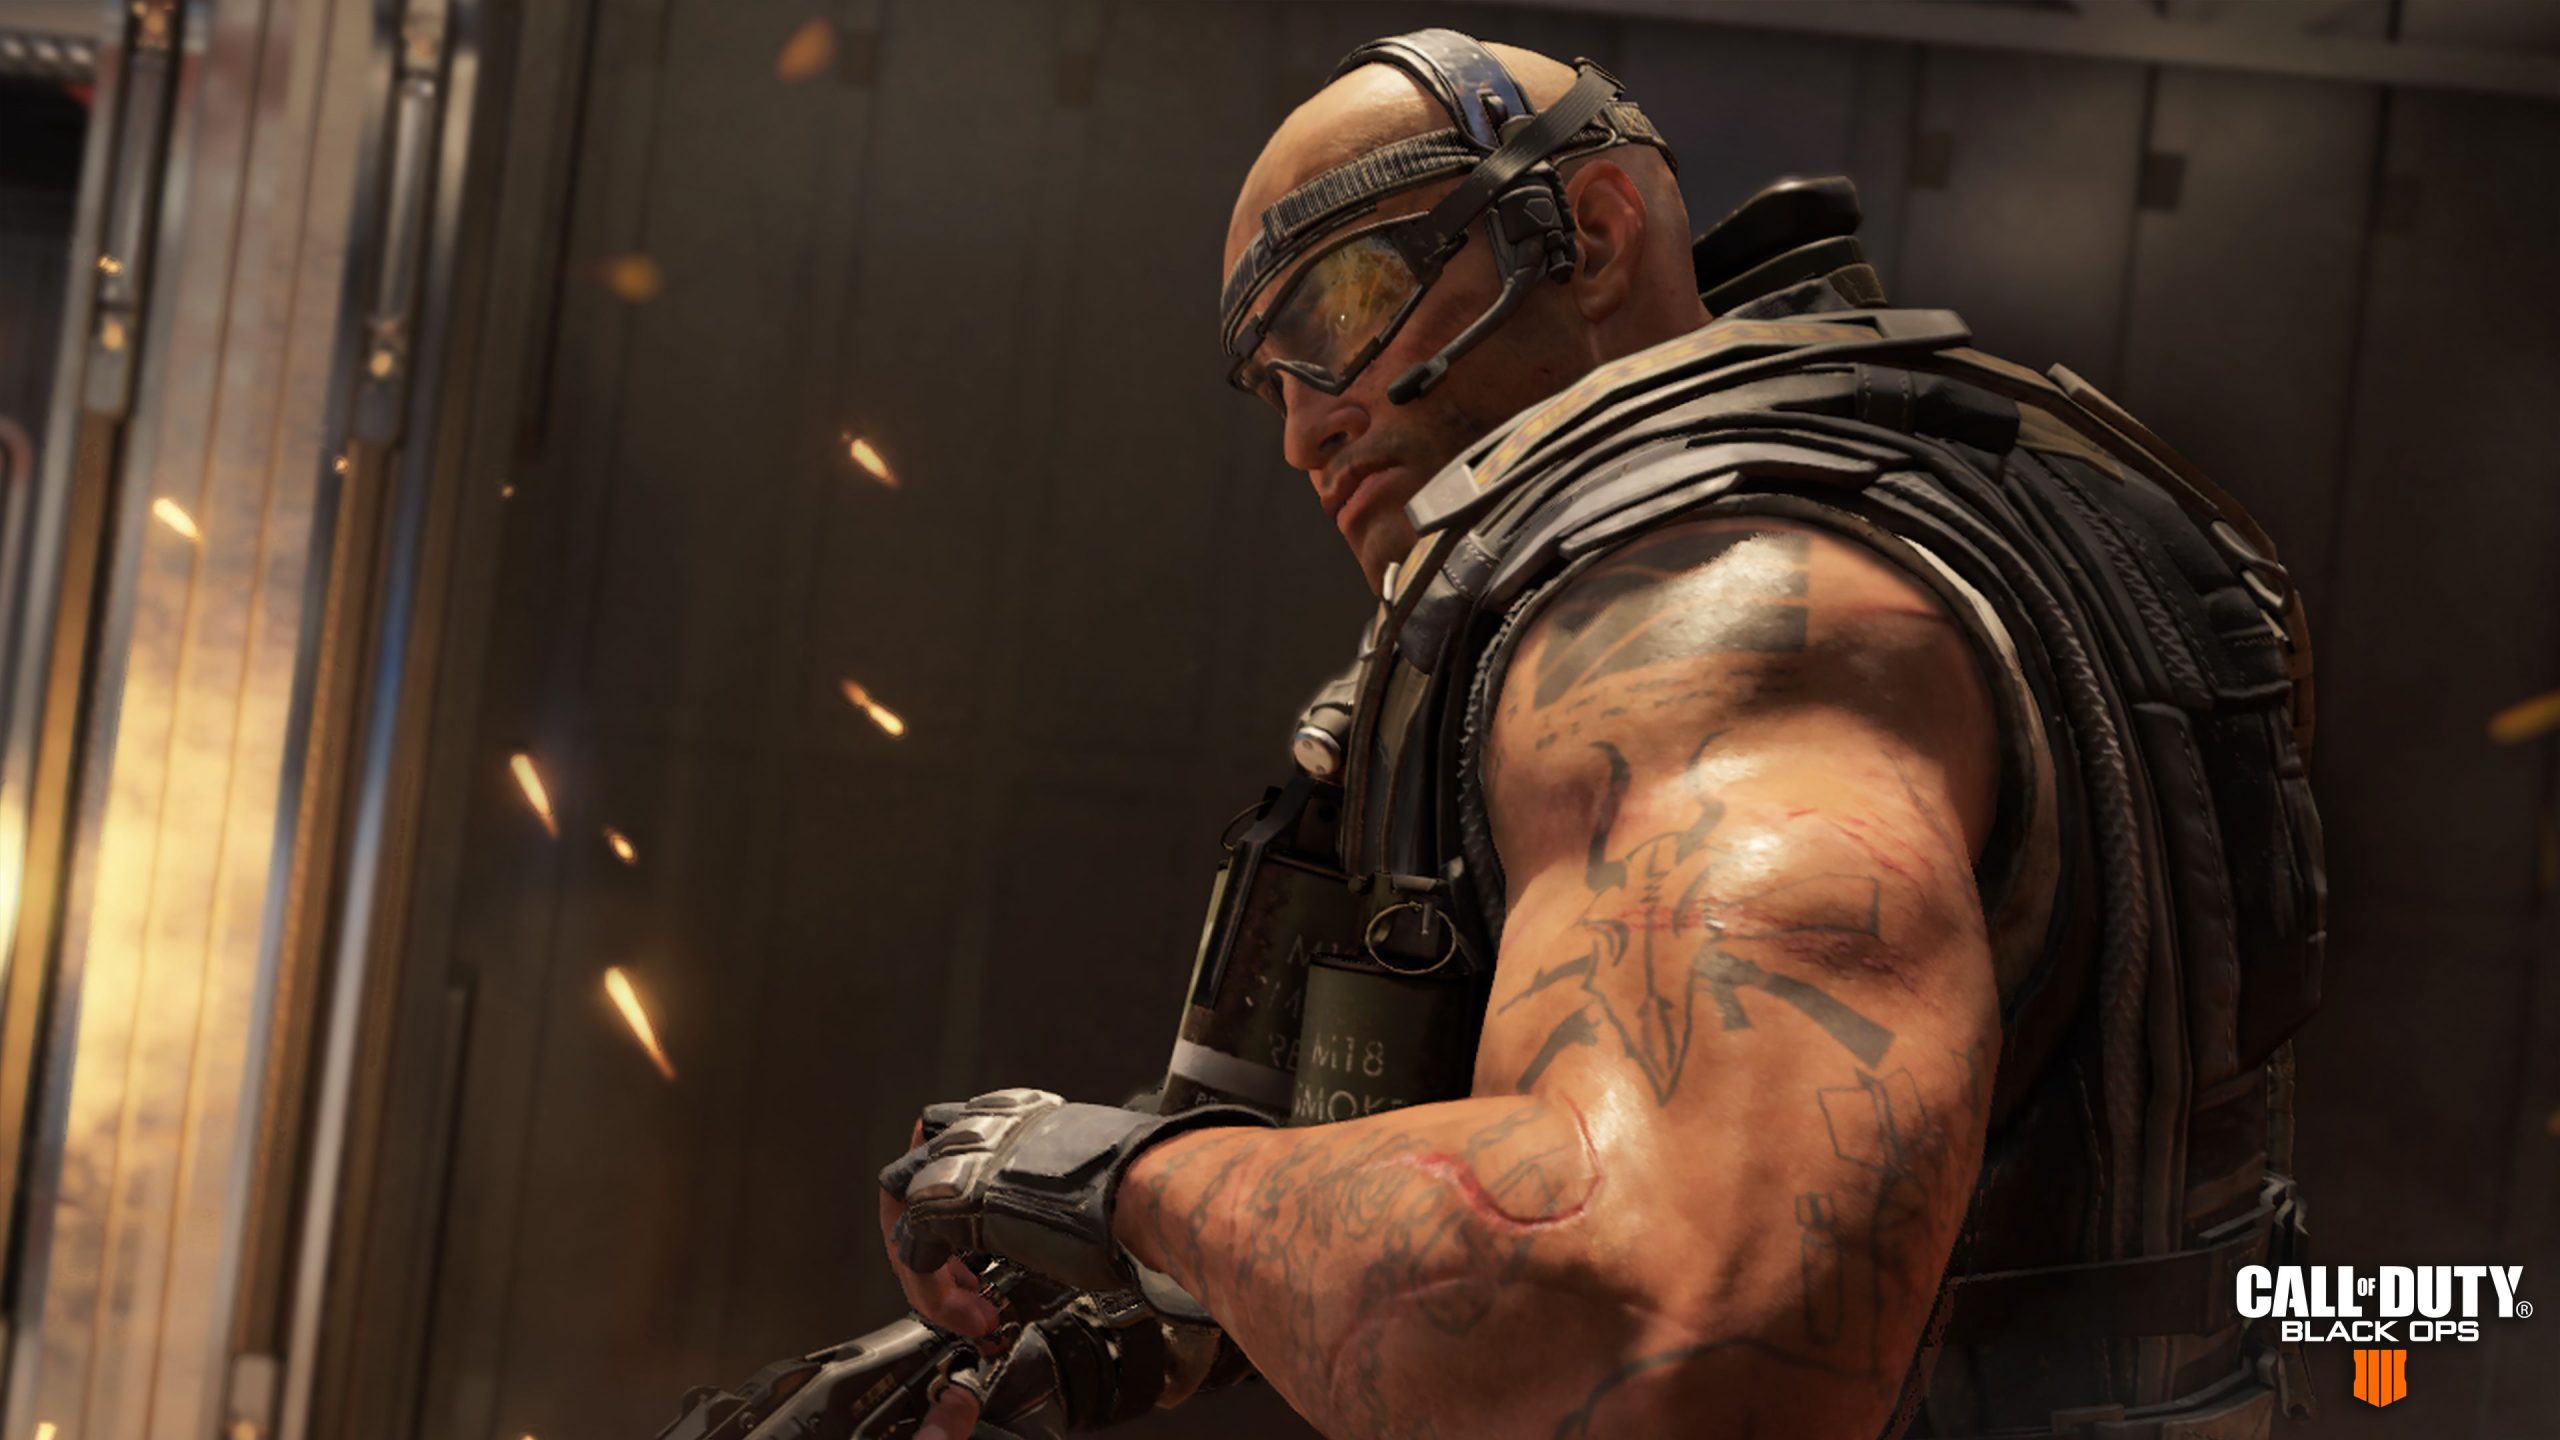 play3 Review: Call of Duty: Black Ops 4: Battlefield 5 muss sich warm anziehen!